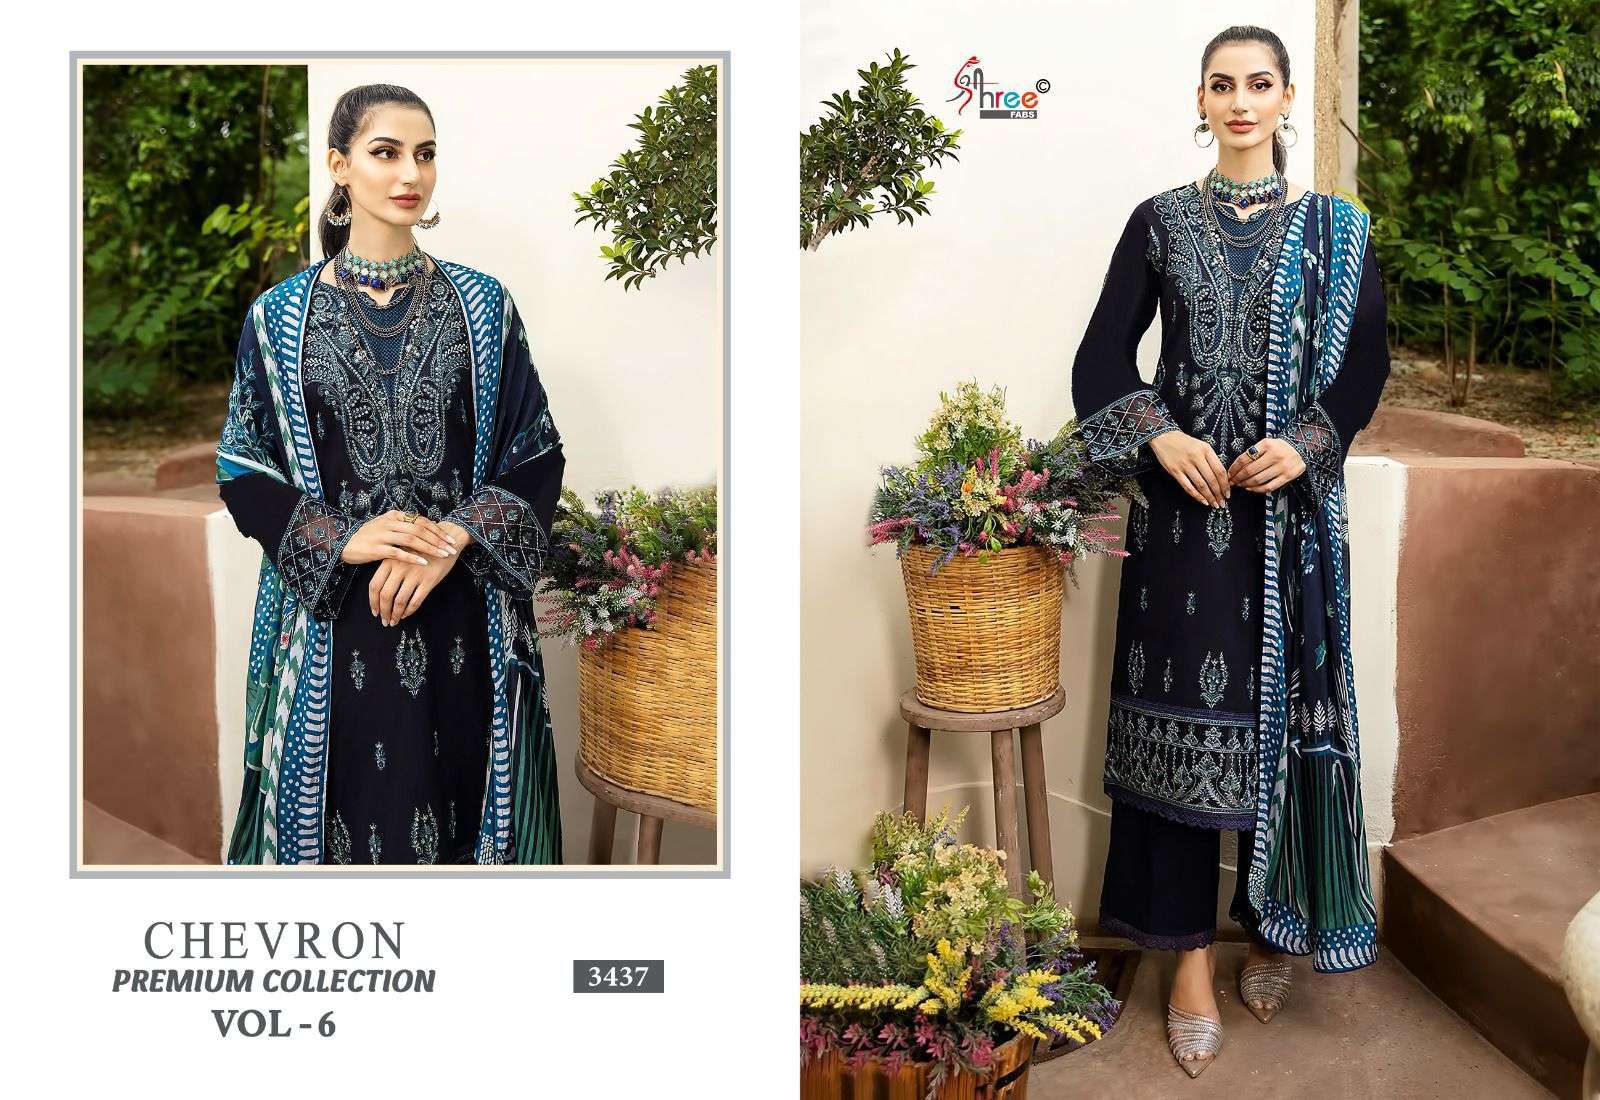 Shree Chevron Vol 6 Chiffon Dupatta Pakistani Suits wholesale catalog